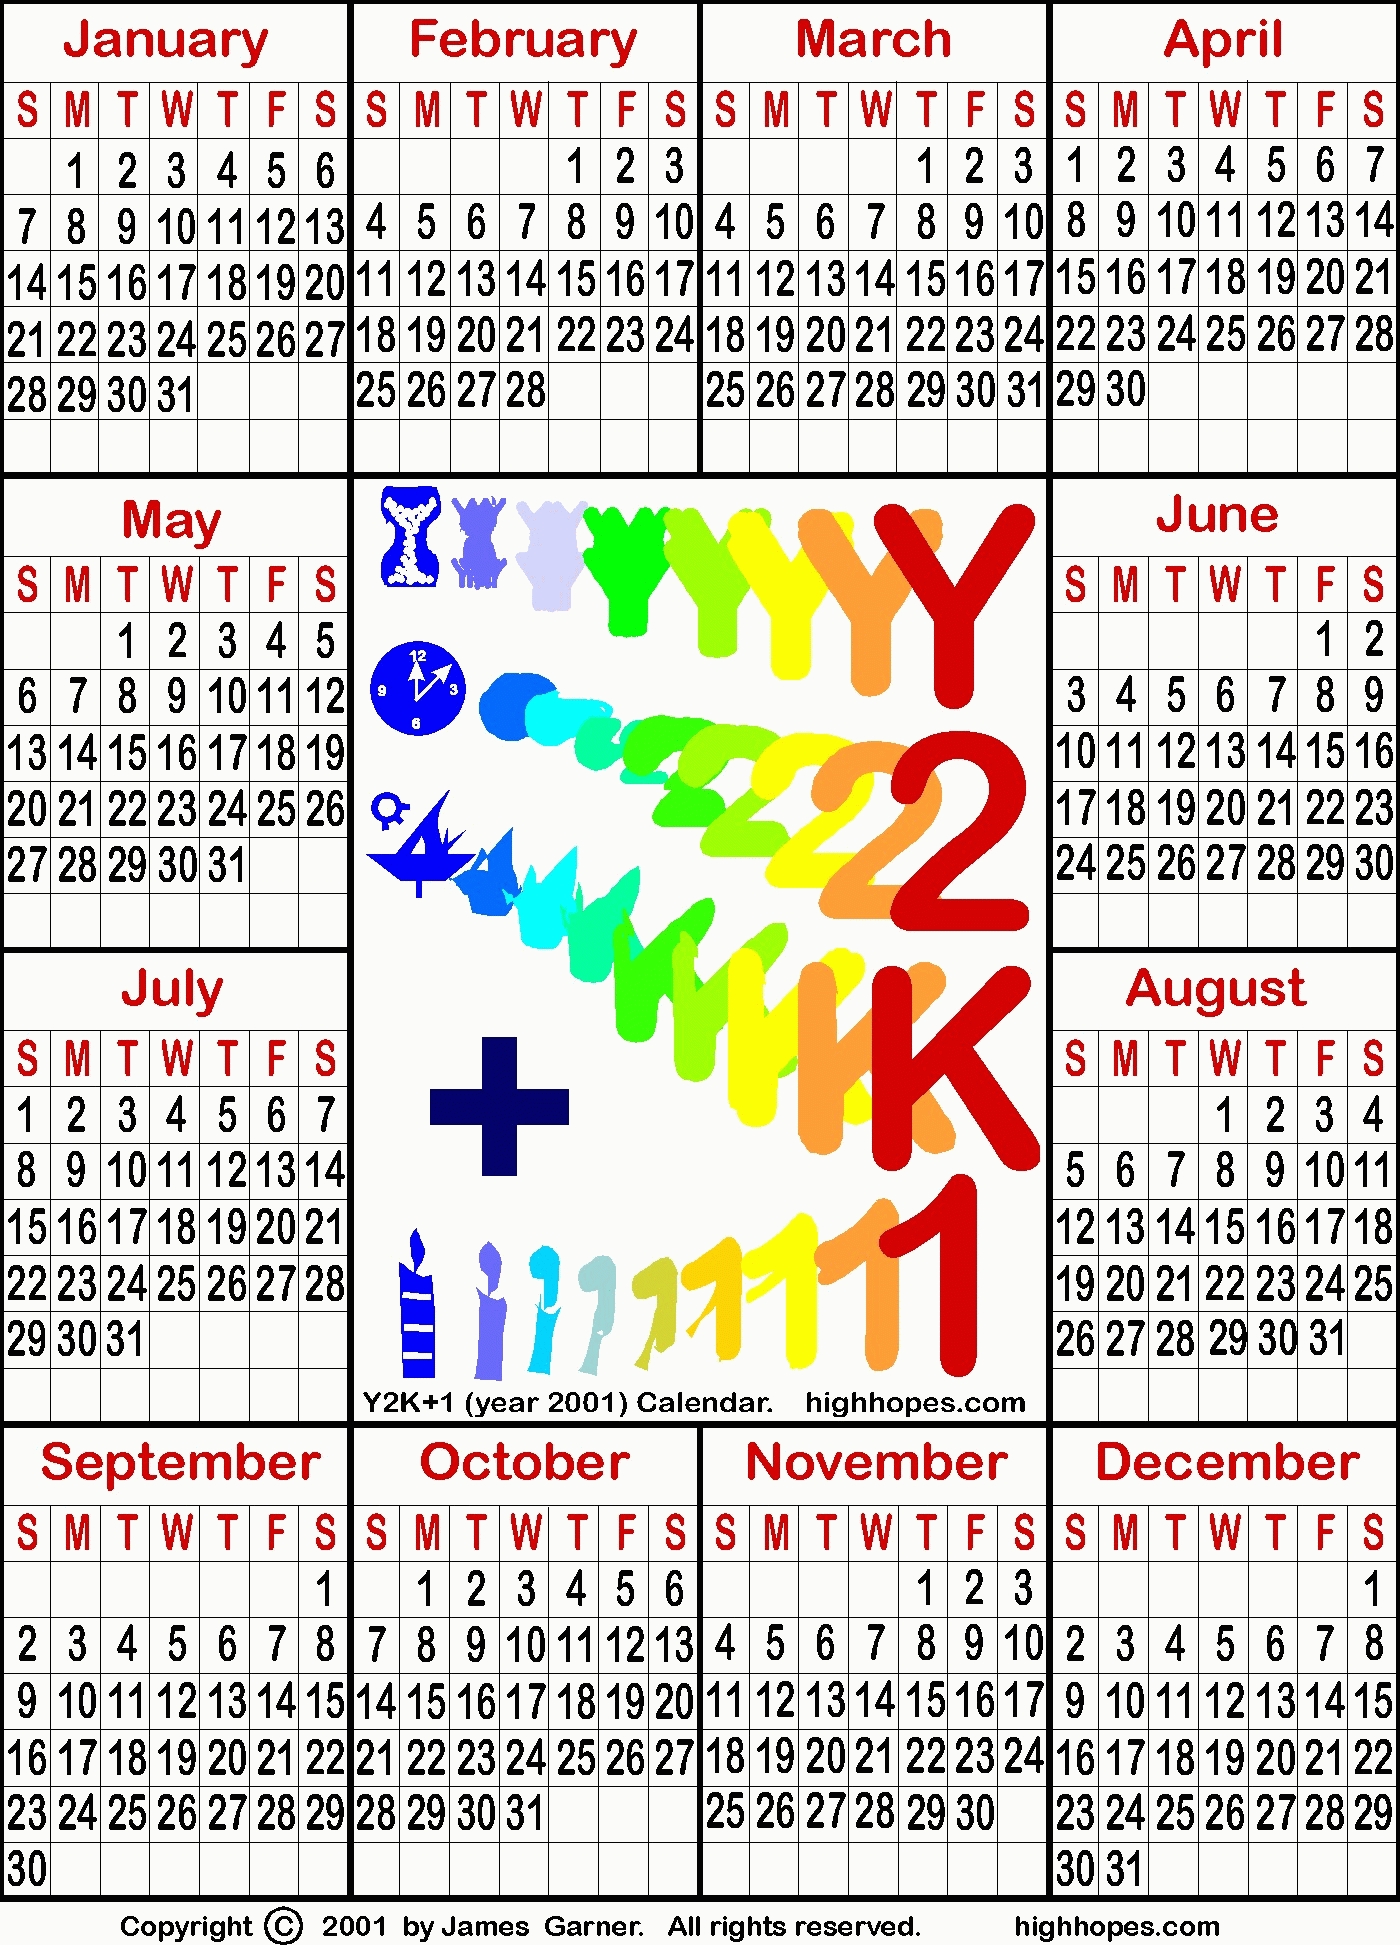 Year 2000 Calendar | Jcreview intended for Urdu Calendar Of Year 2000 Month December